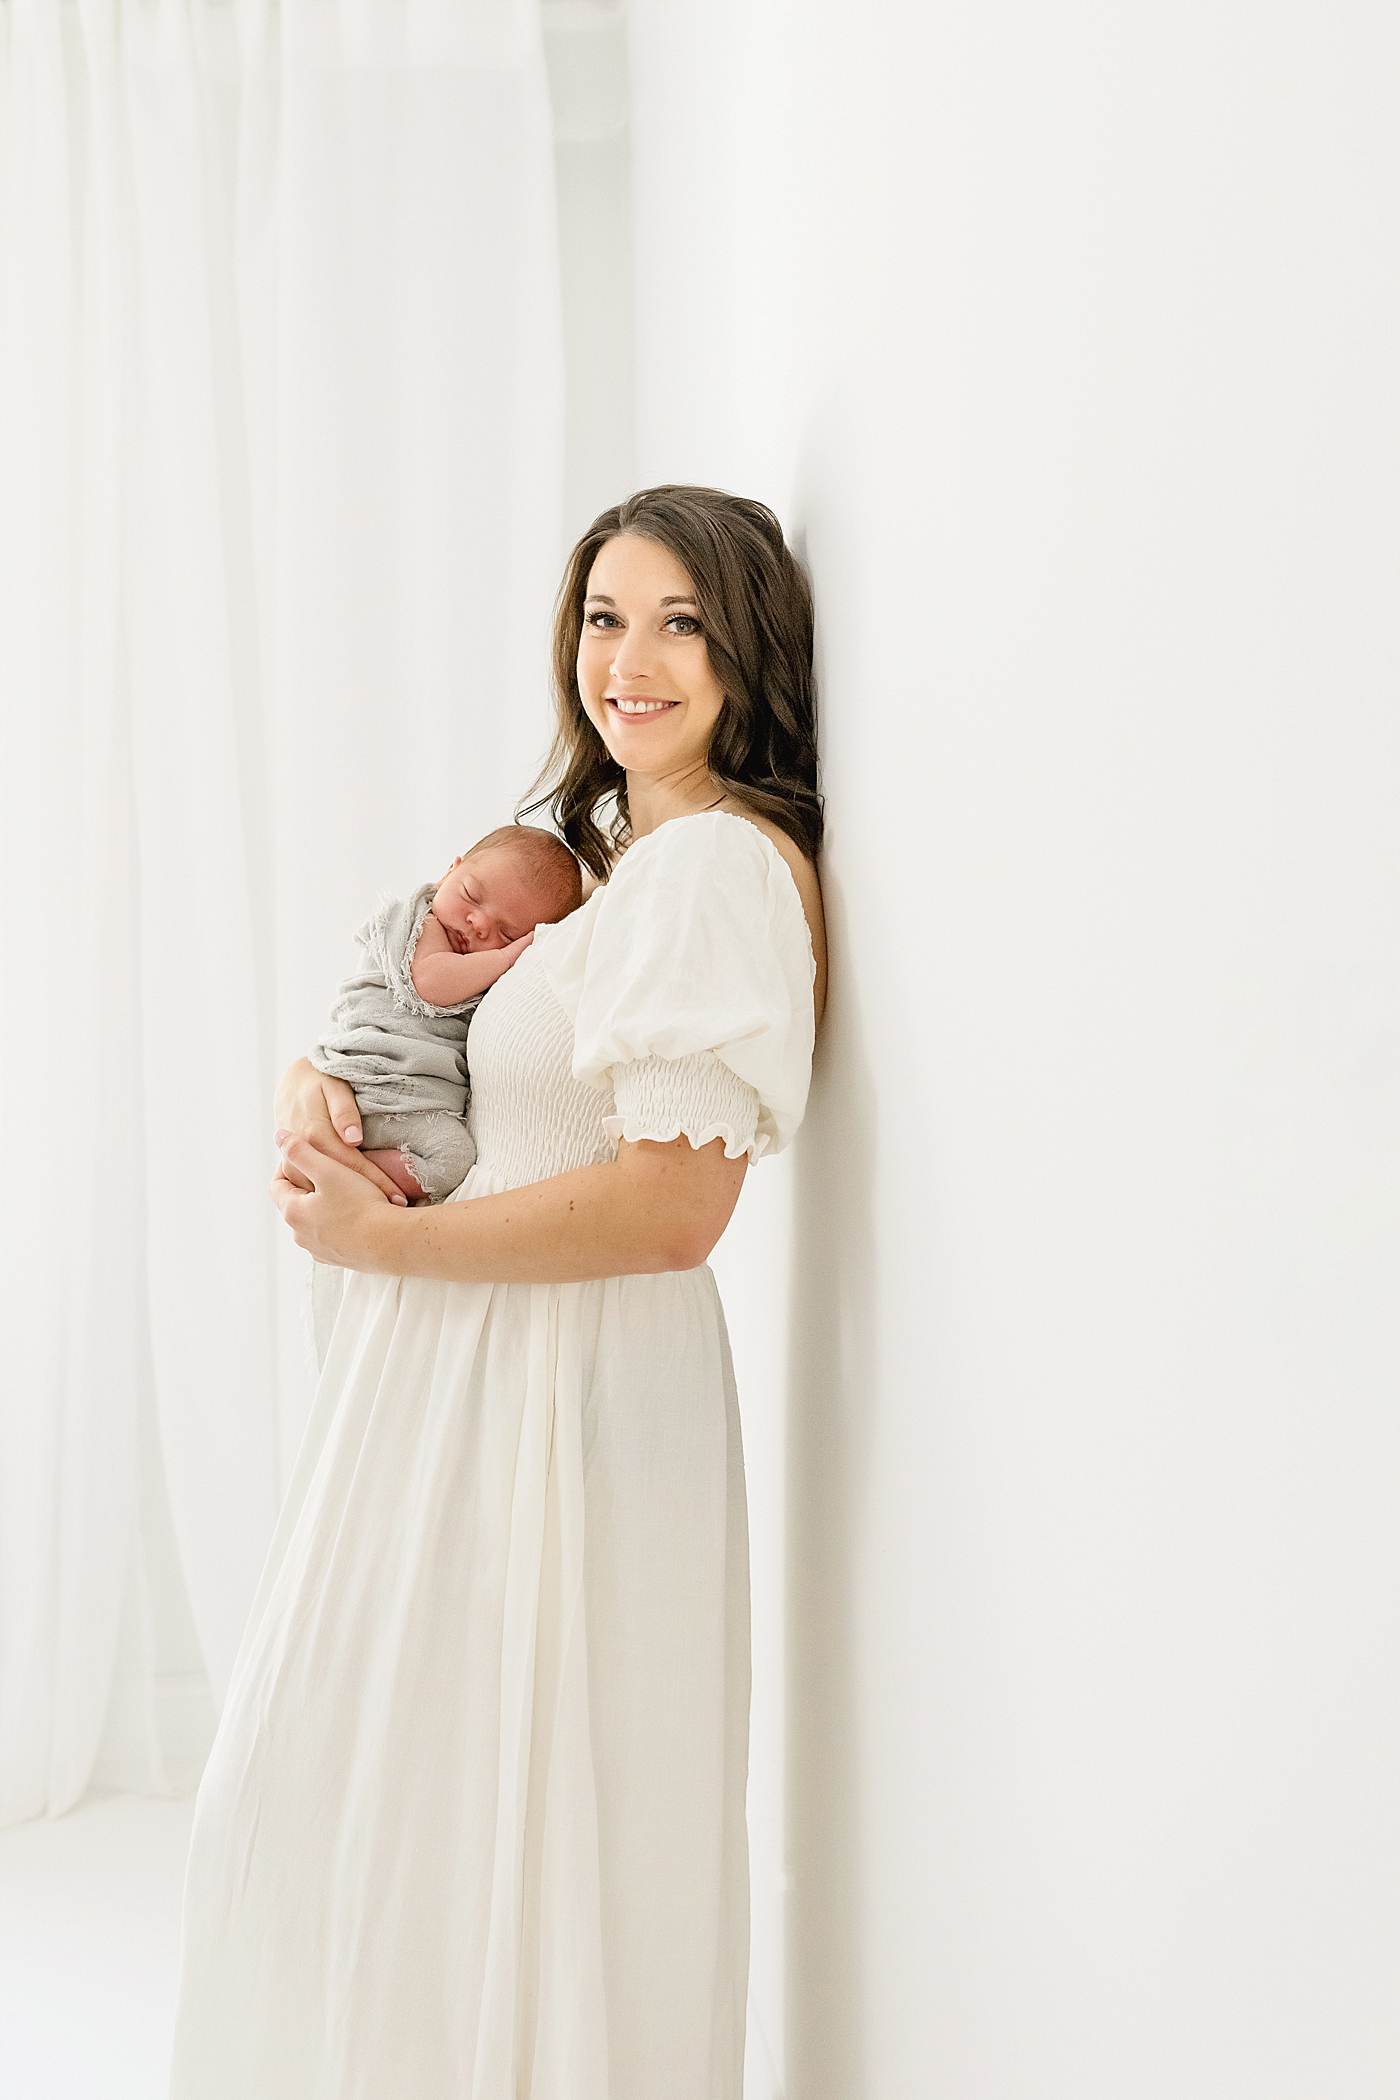 Mom in white dress holding her new baby | Photo by North Carolina Newborn Photographer Anna Wisjo 